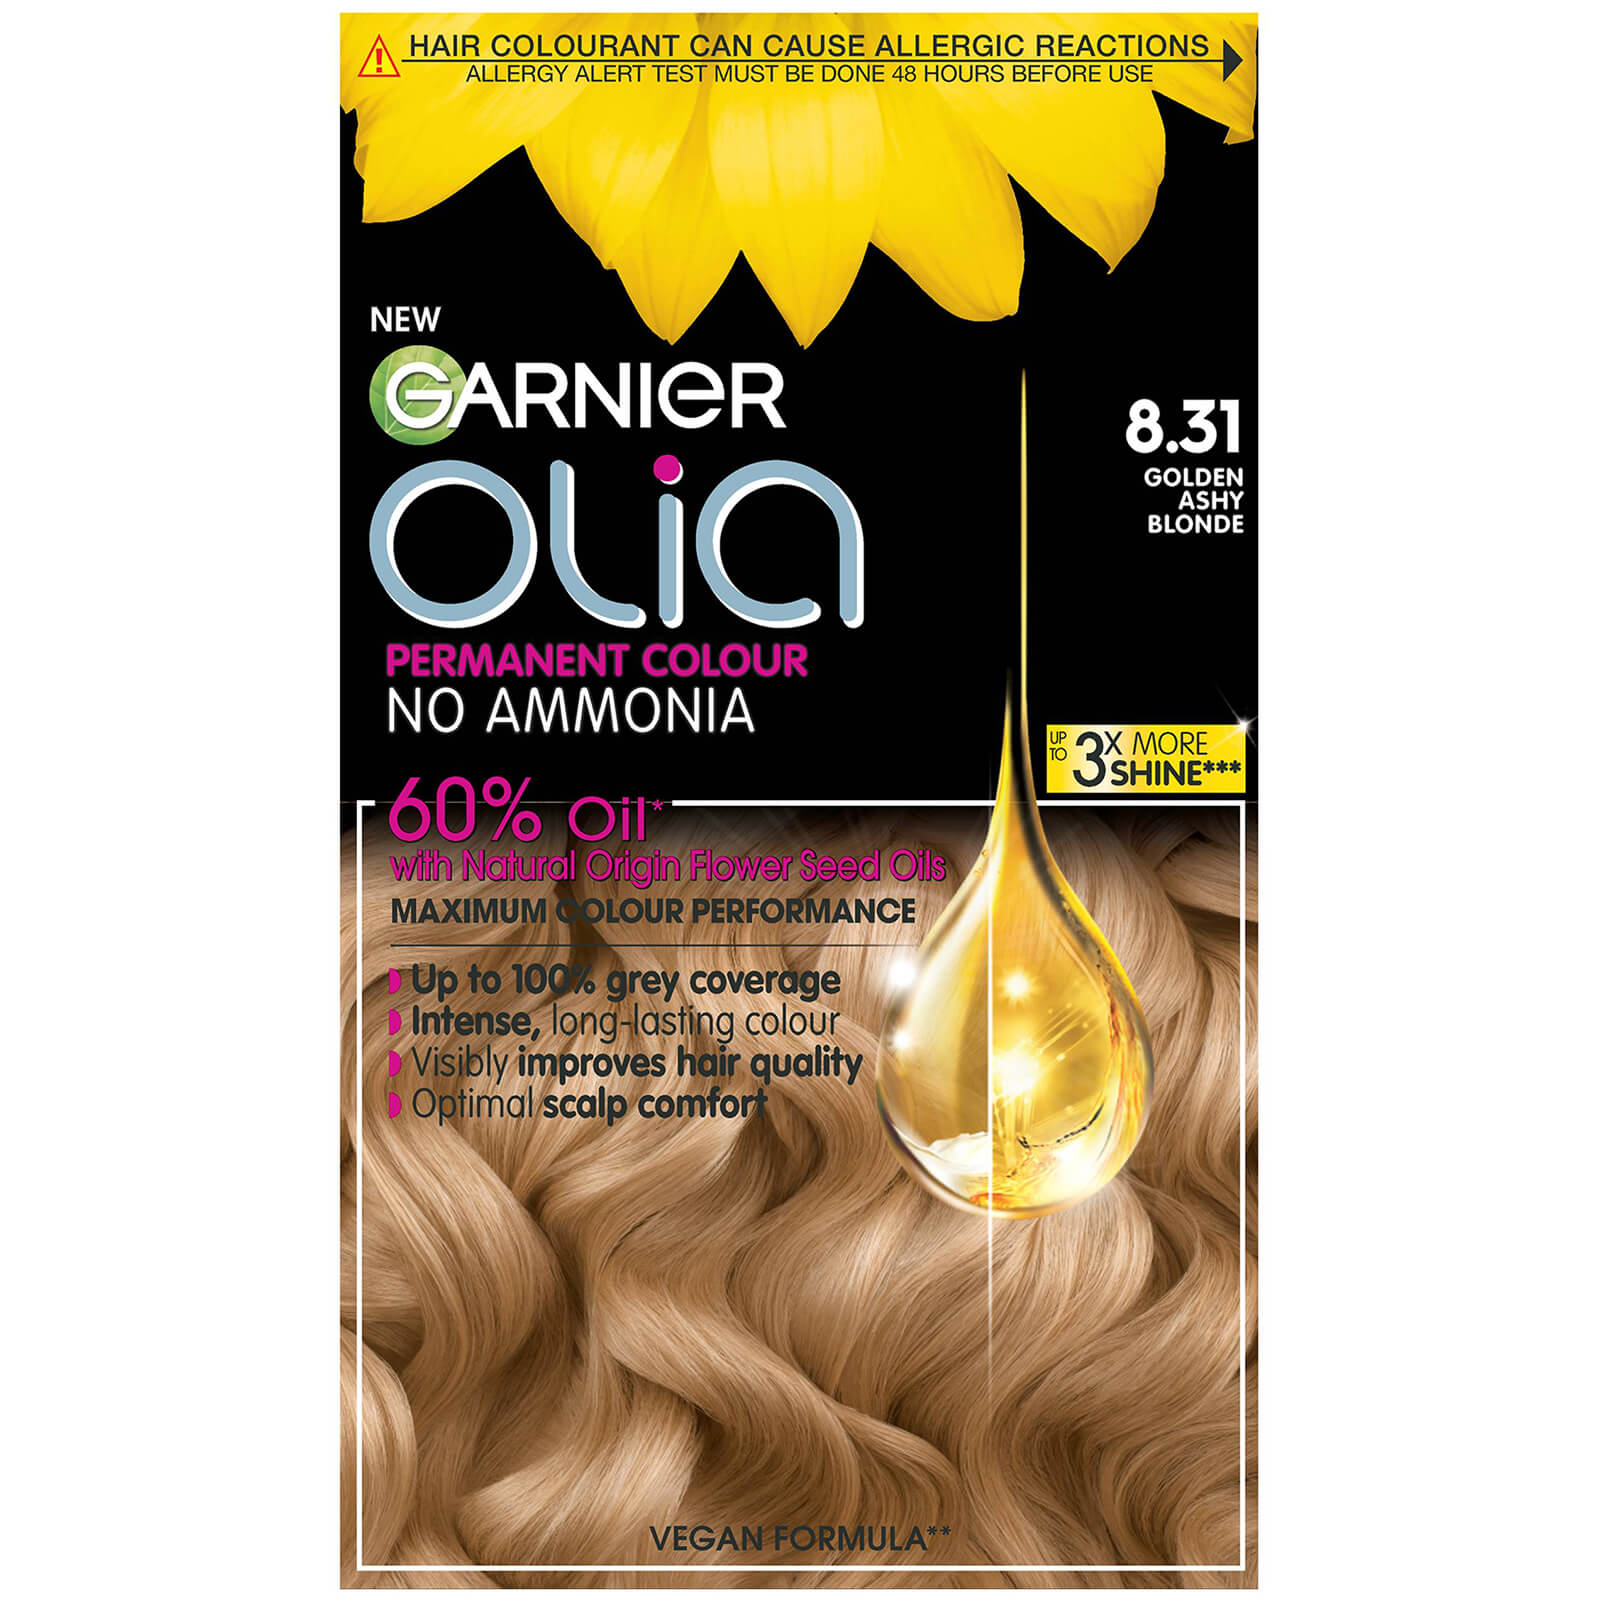 Garnier Olia Permanent Hair Dye (Various Shades) - 8.31 Golden Ash Blonde